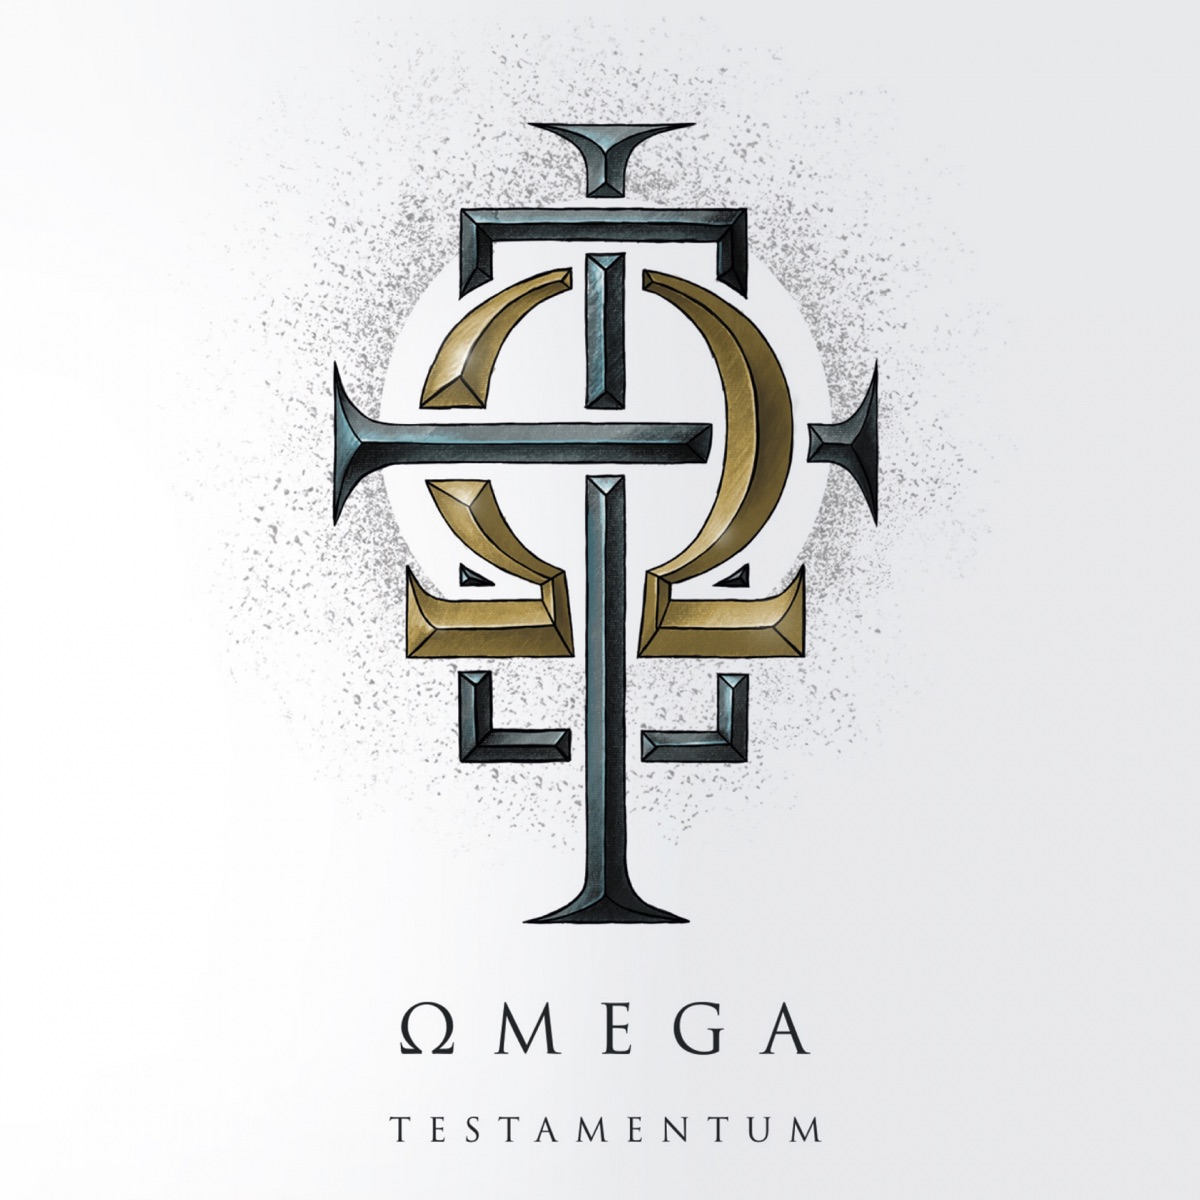 Testamentum - Album by Omega - Apple Music